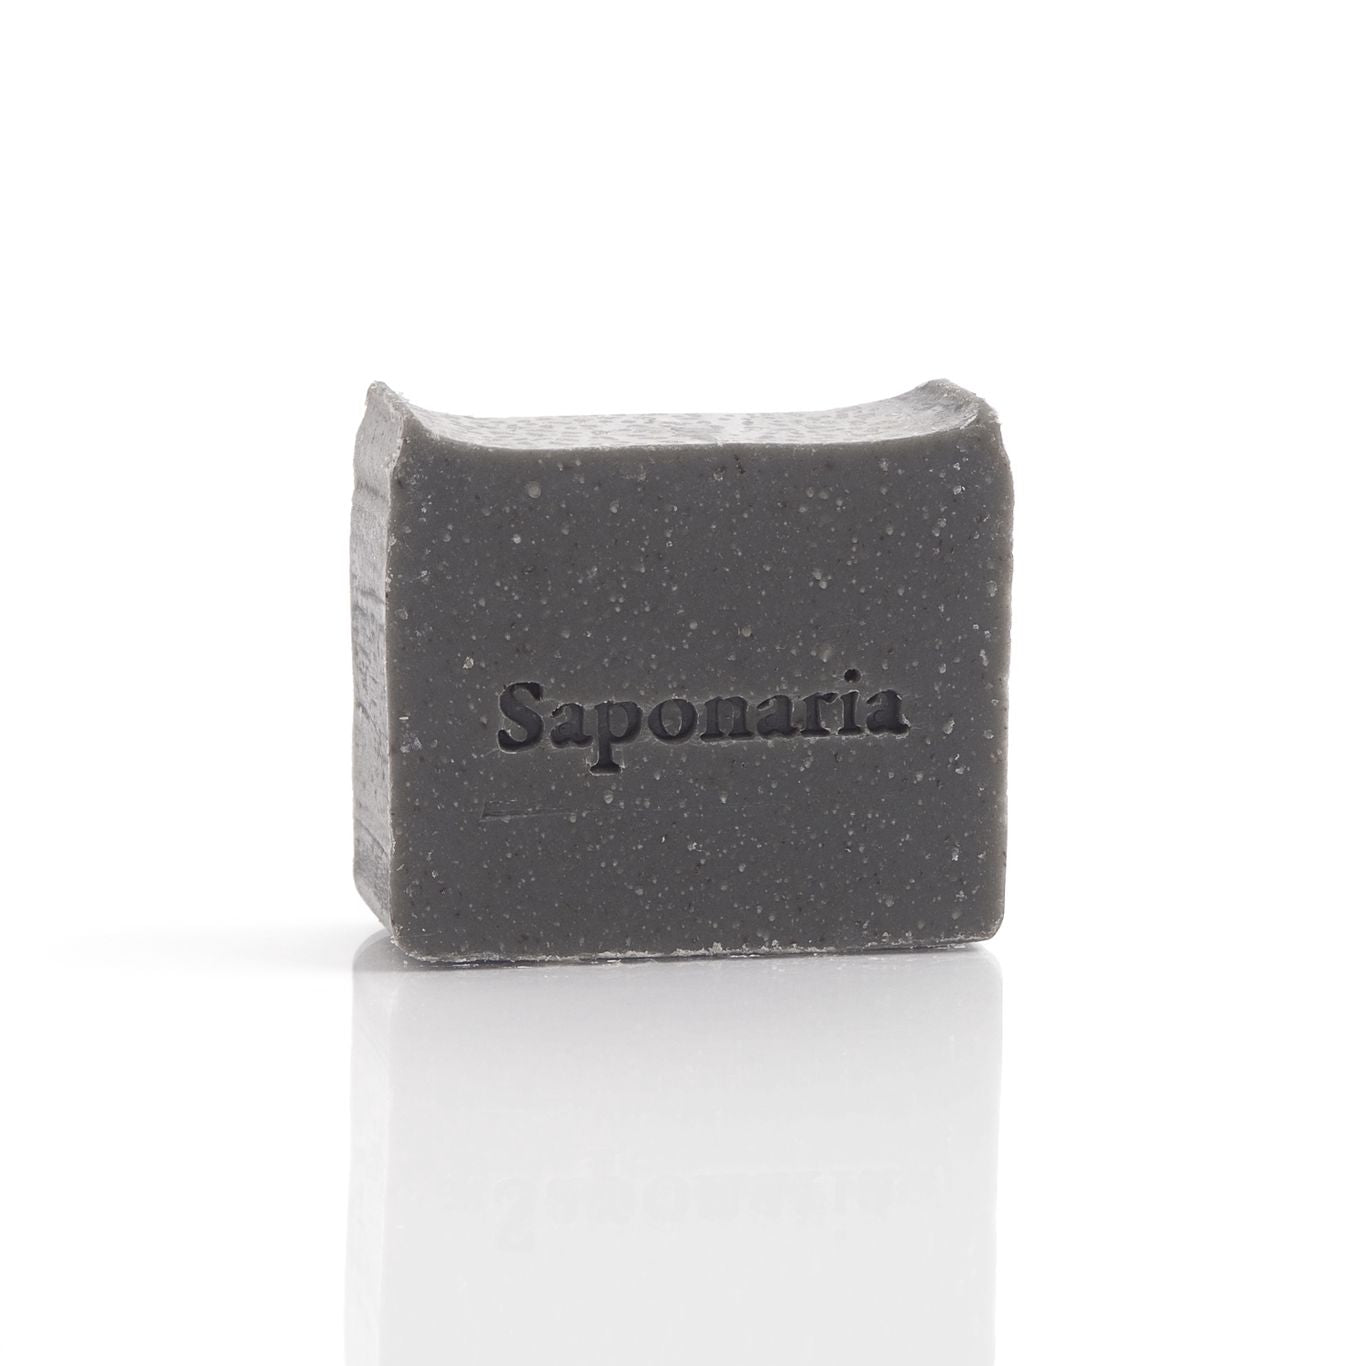 Saponaria Soap | Acne skin